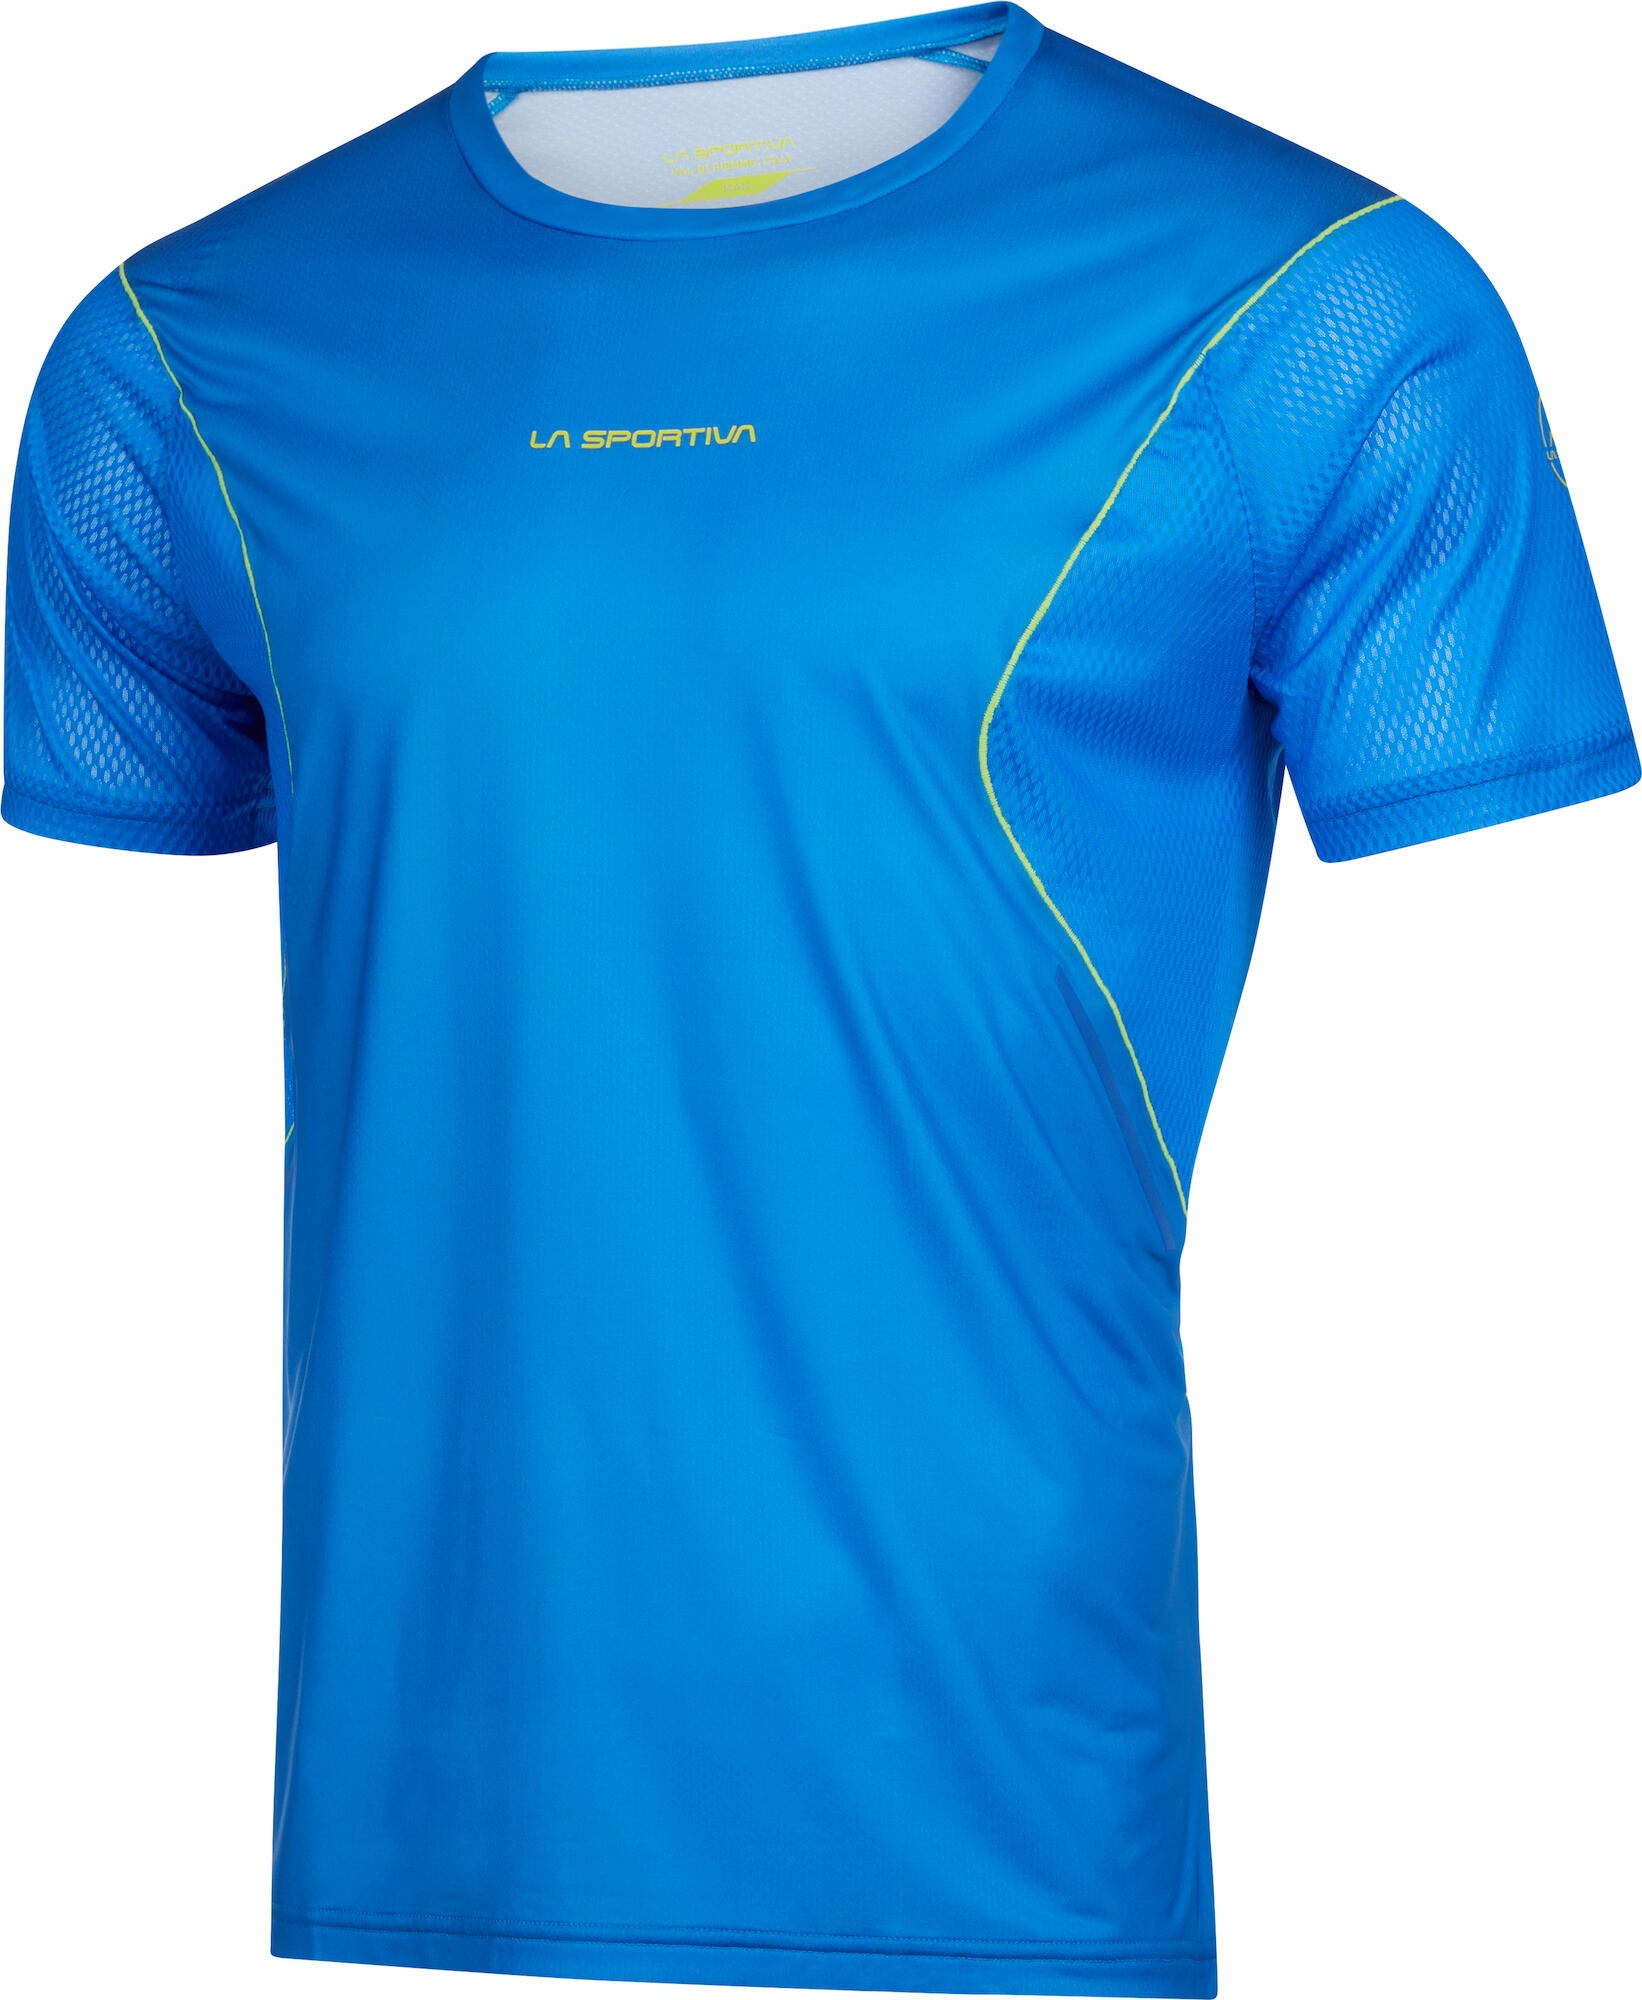 La Sportiva Resolute T-shirt Men electric blue (634634) S